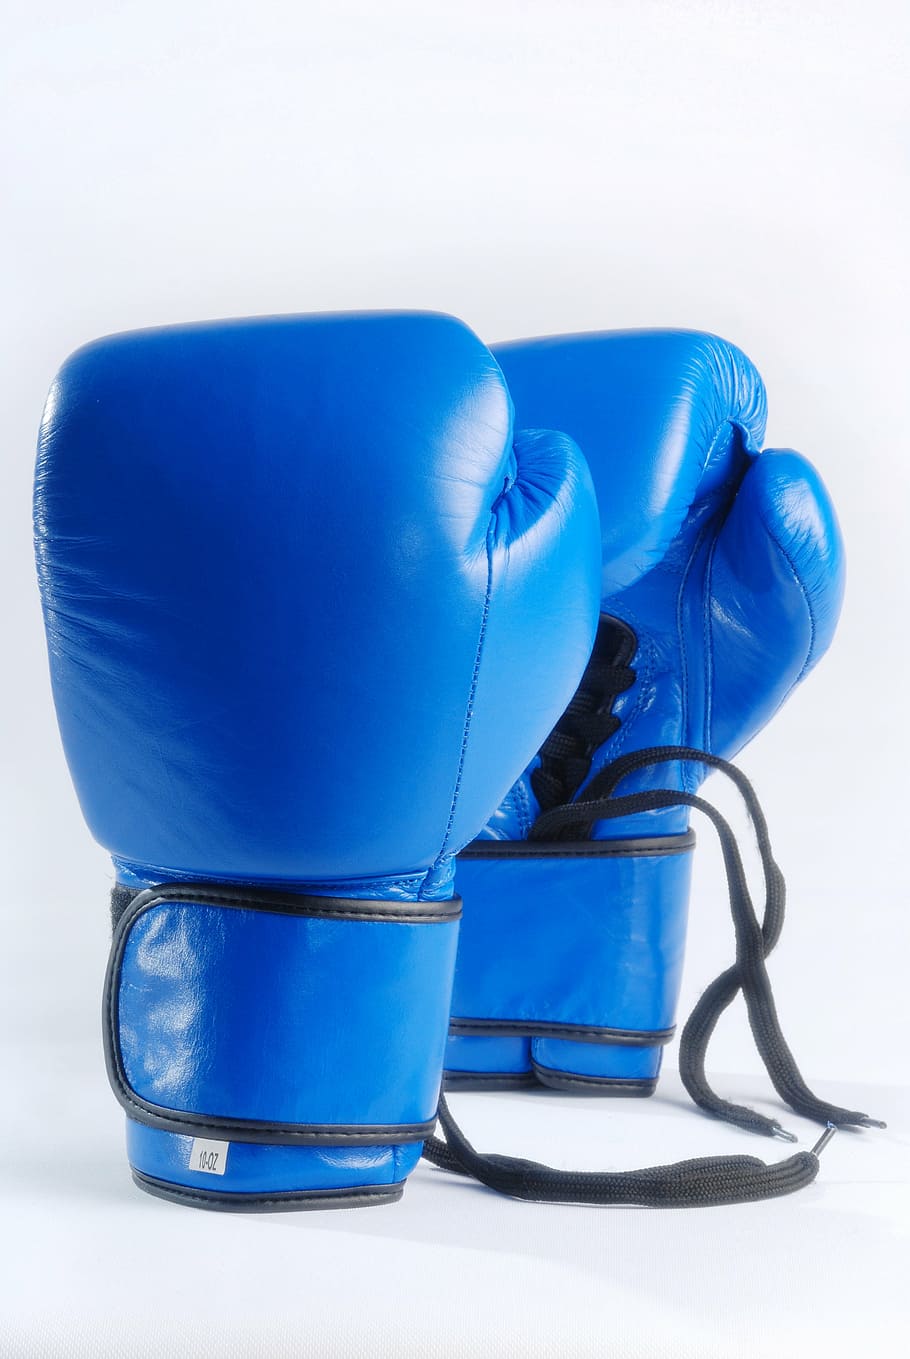 Par, guantes de boxeo, guantes de boxeo azules, aislado sobre fondo blanco, lucha, deporte, boxeo, equipo, competencia, violencia